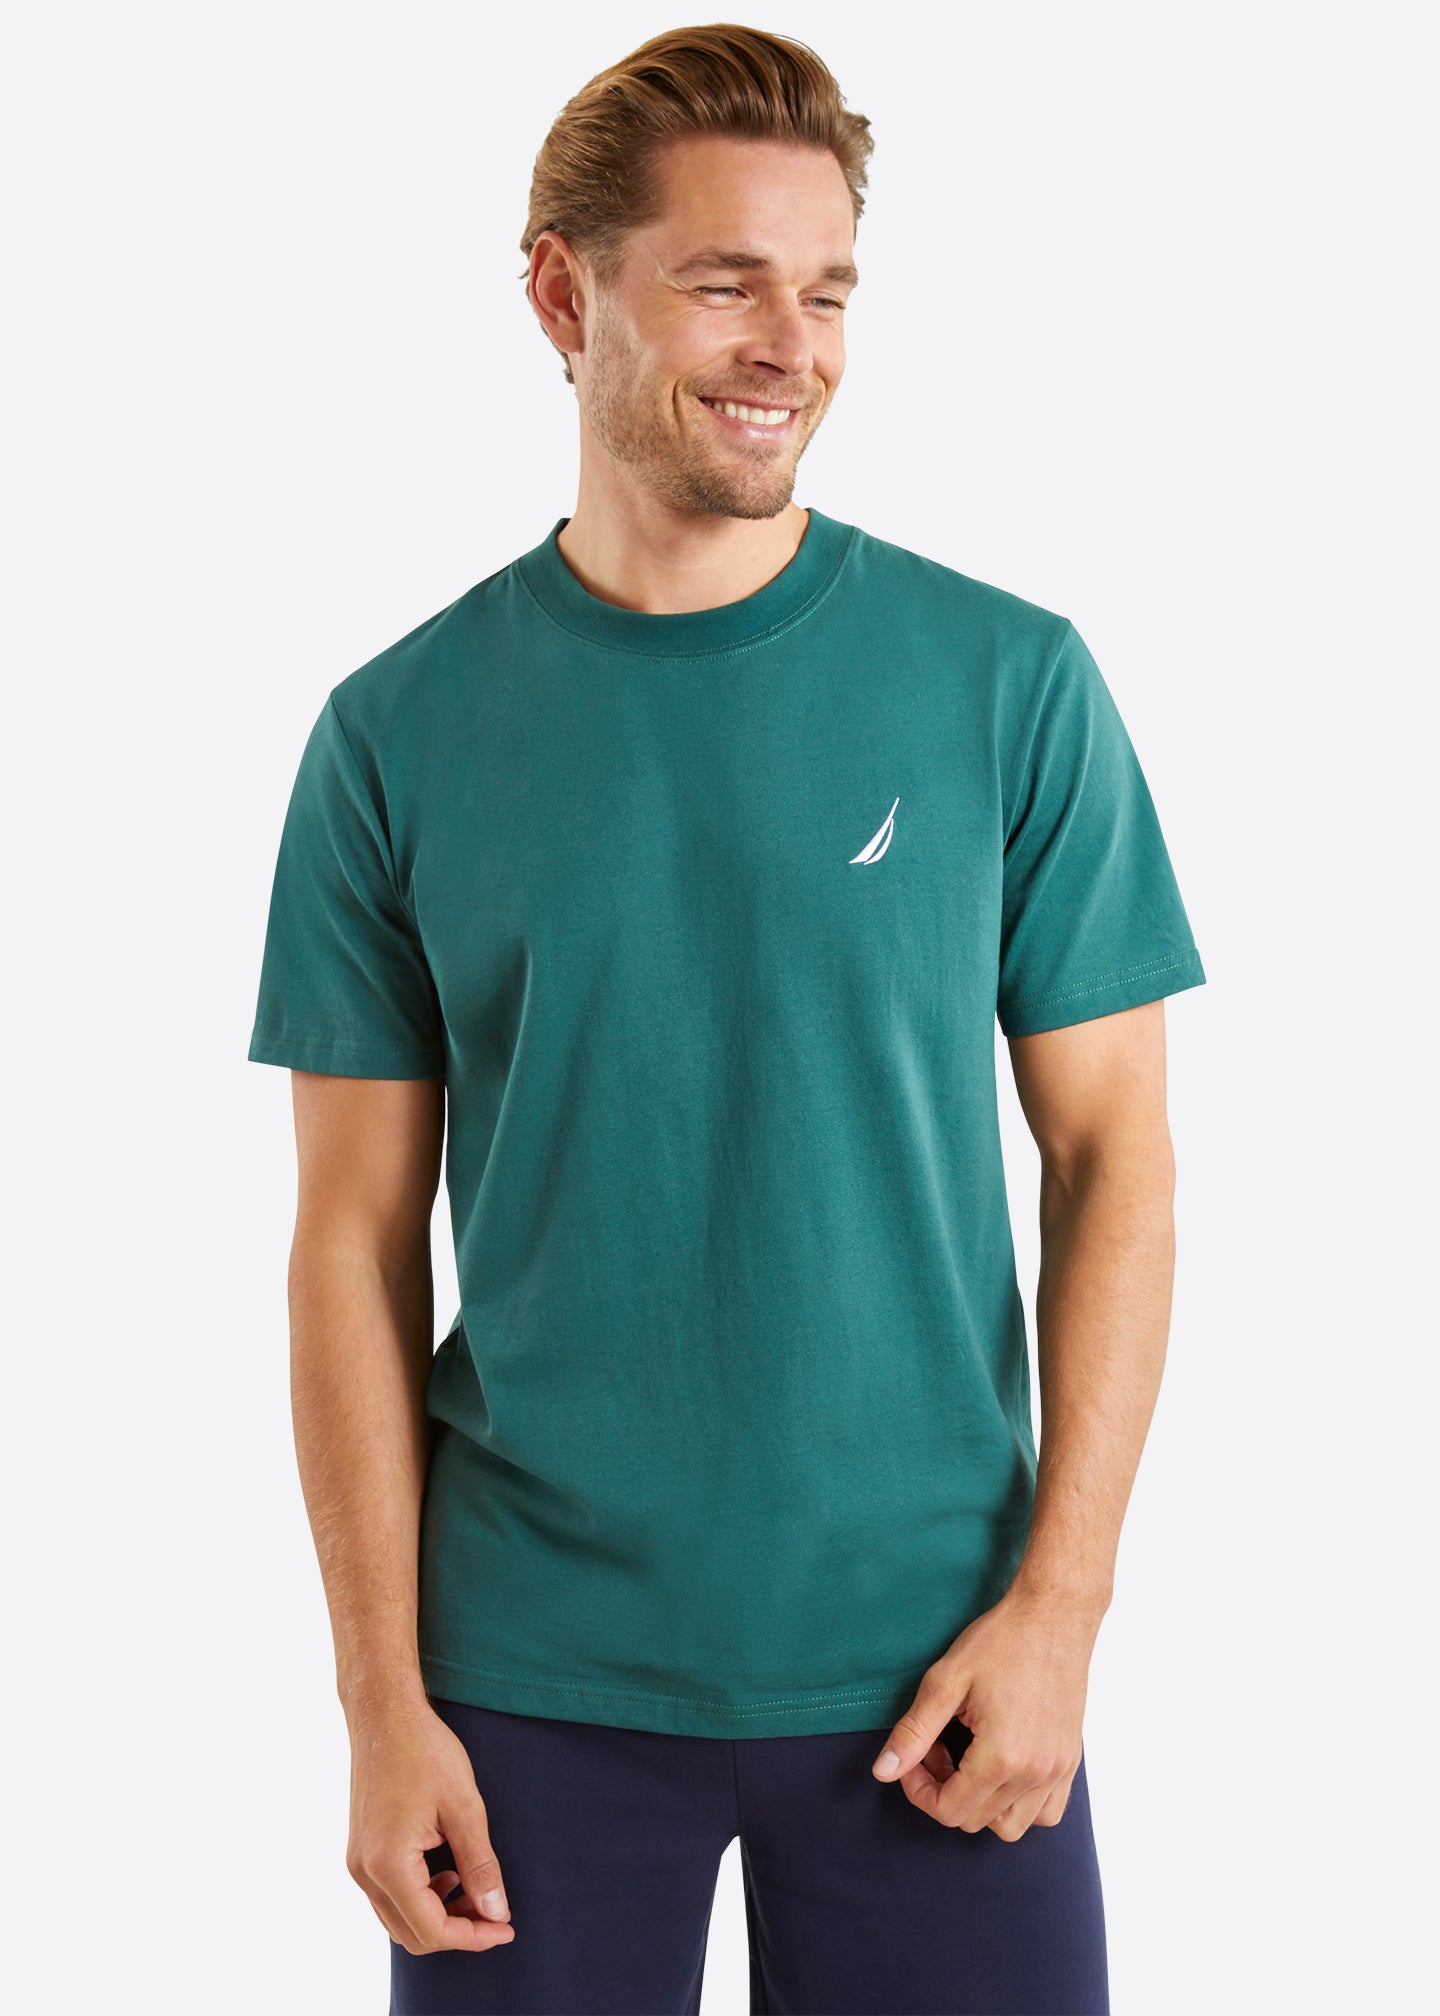 Nautica Manitoba T-Shirt - Moss Green - Front